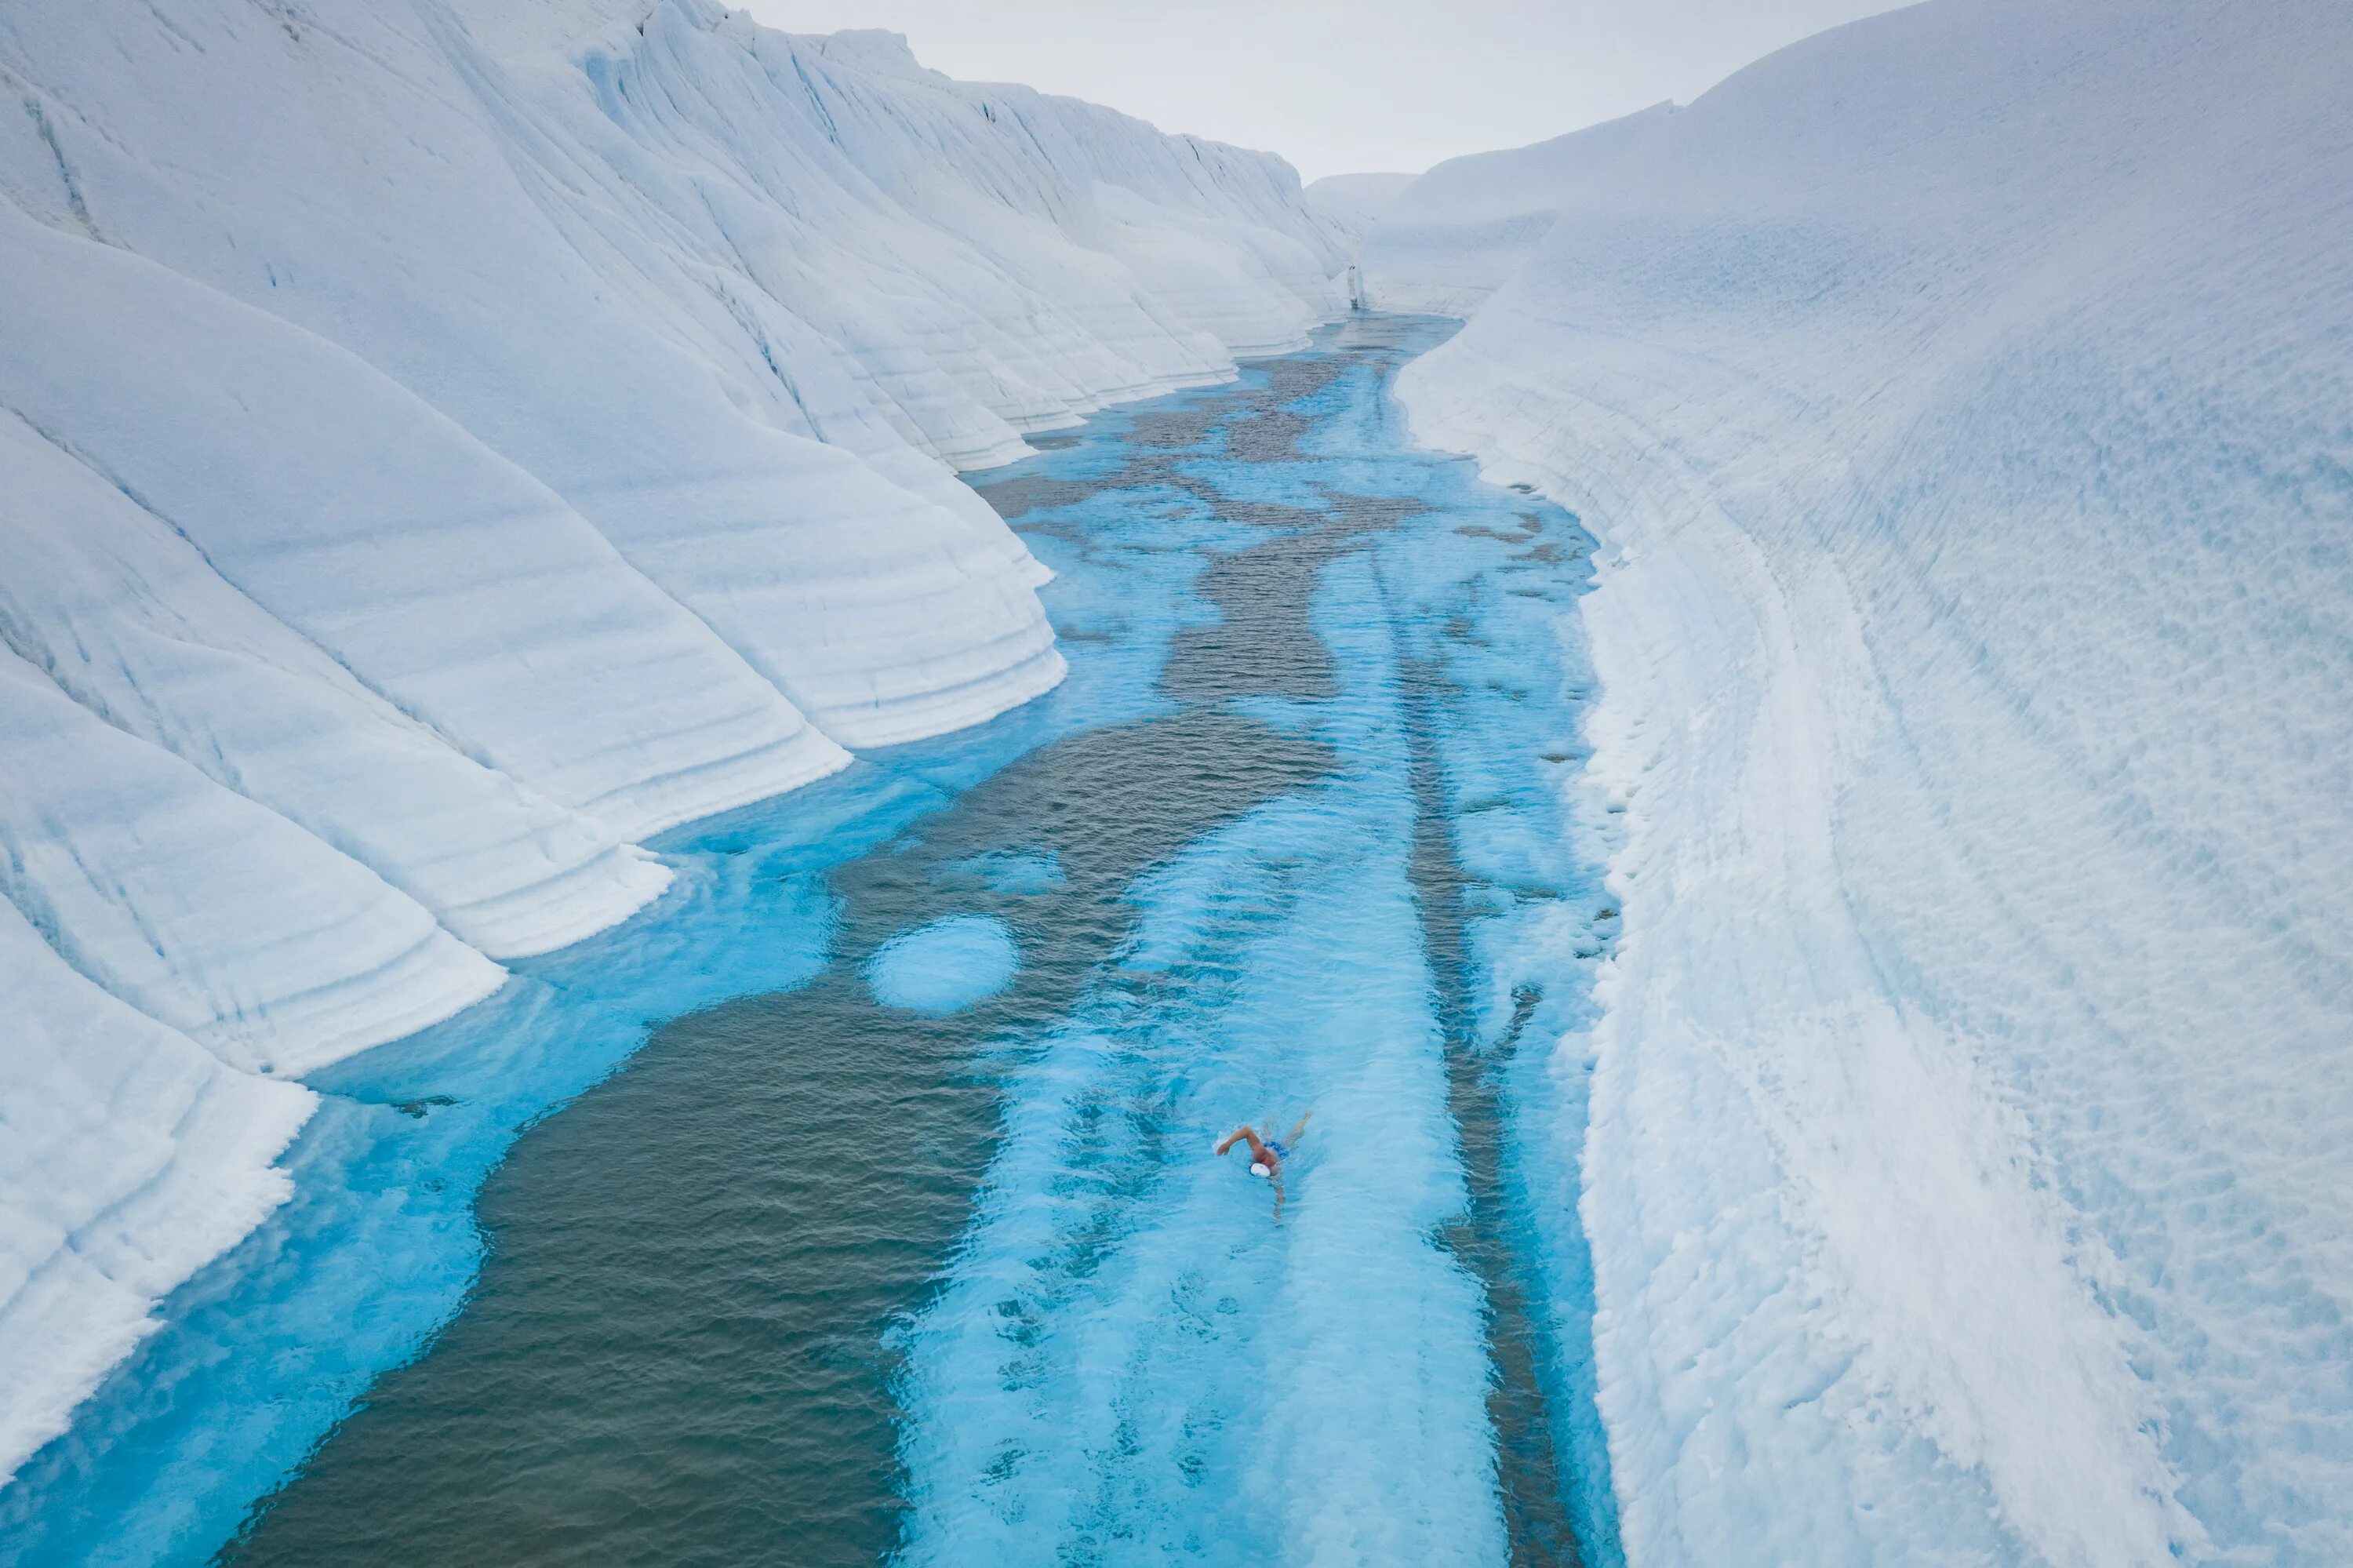 Лед без воды. Ледяной каньон Гренландия. Гренландия ледник Антарктида Арктика Гренландия. Ледники Гренландии. Антарктика 2020 плавание Льюис.